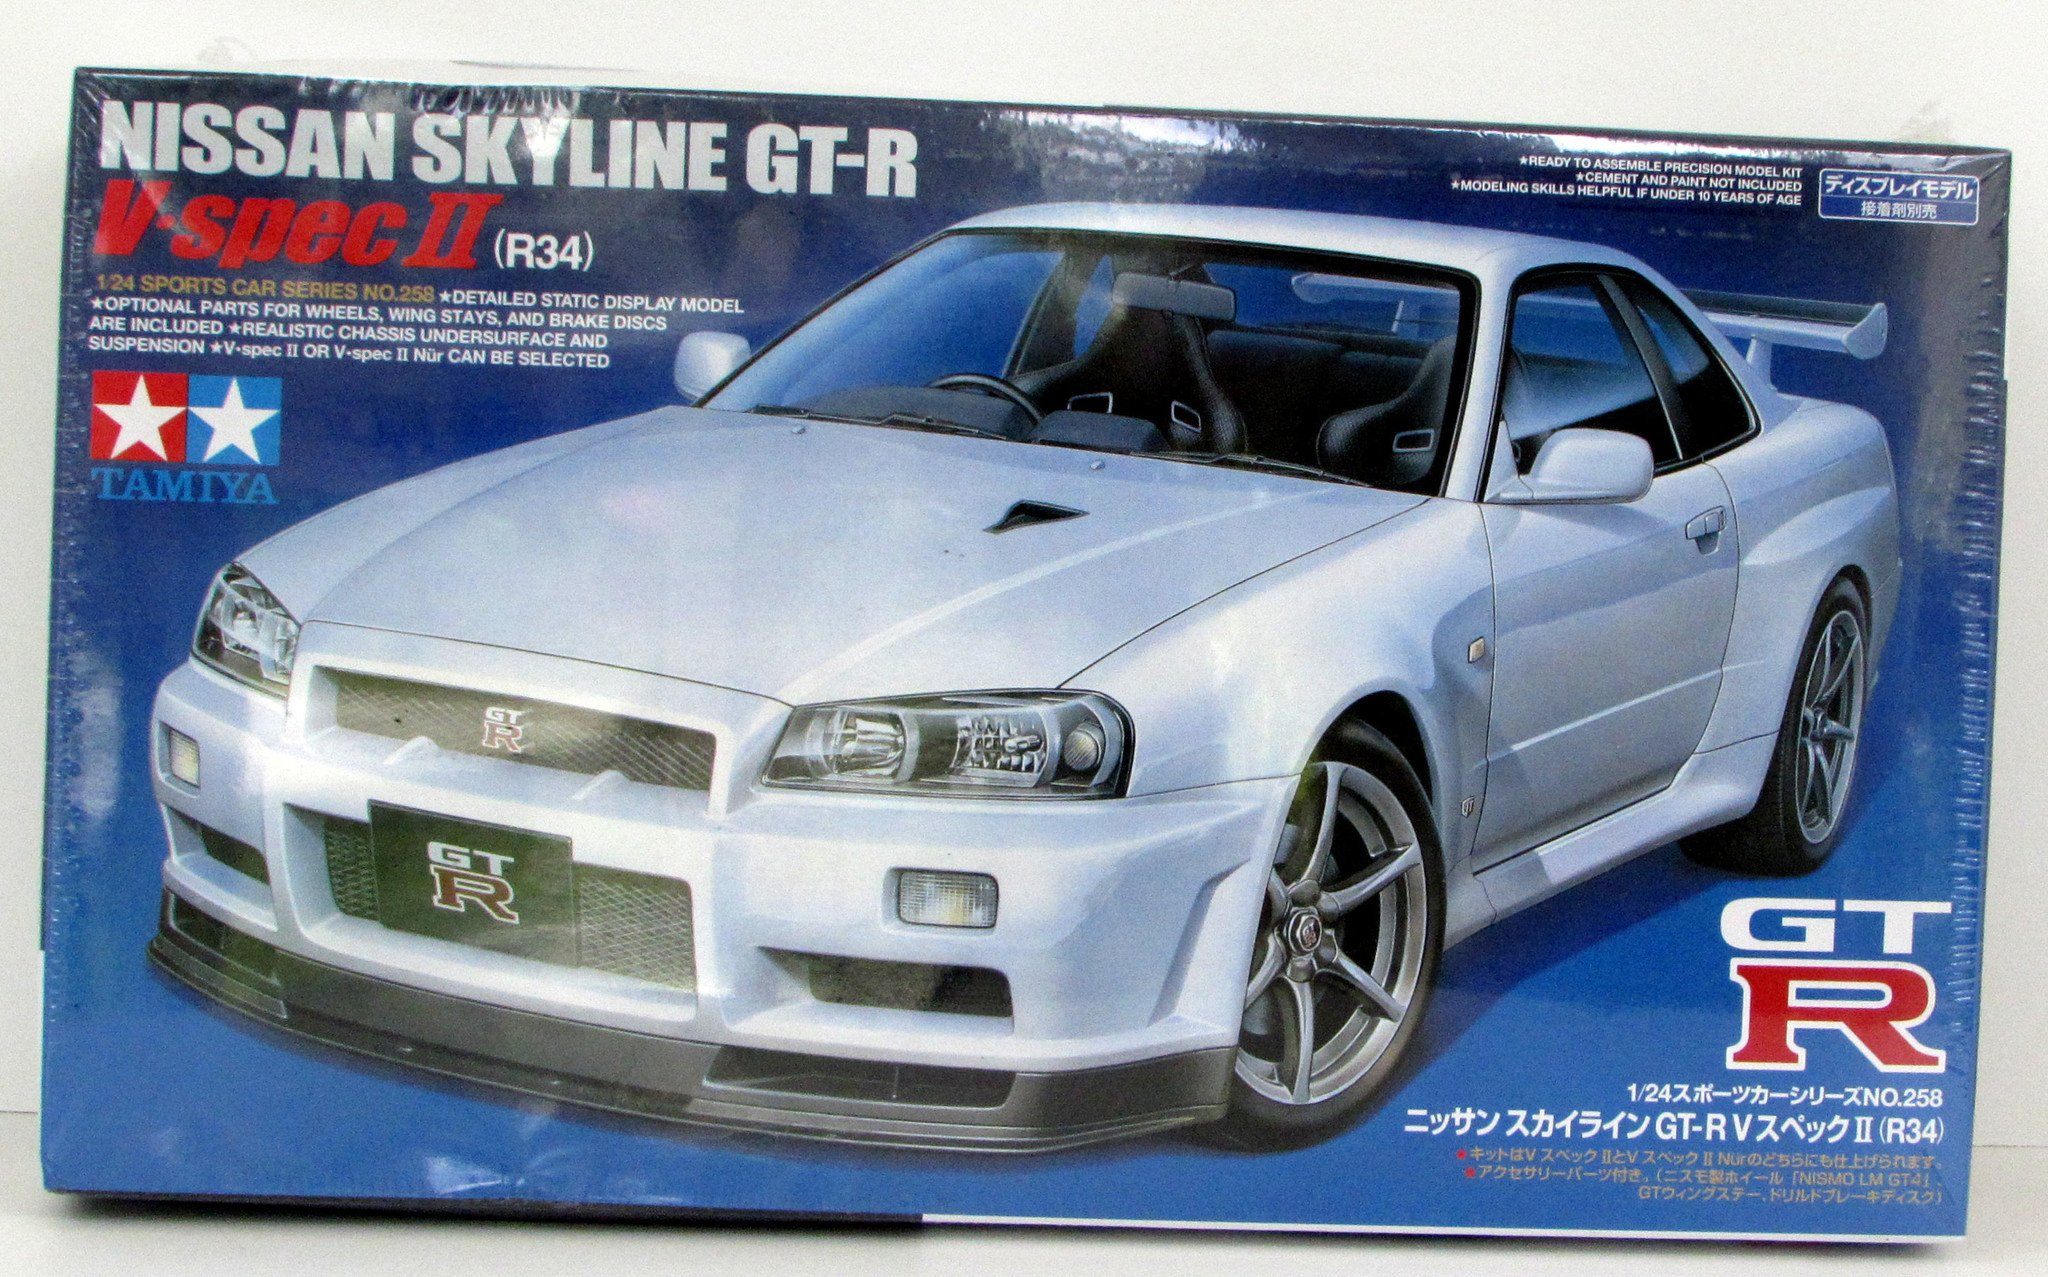 Nissan Skyline GT-R V-spec II (R34) Sports Car Series Tamiya #24258 1/24 Kit